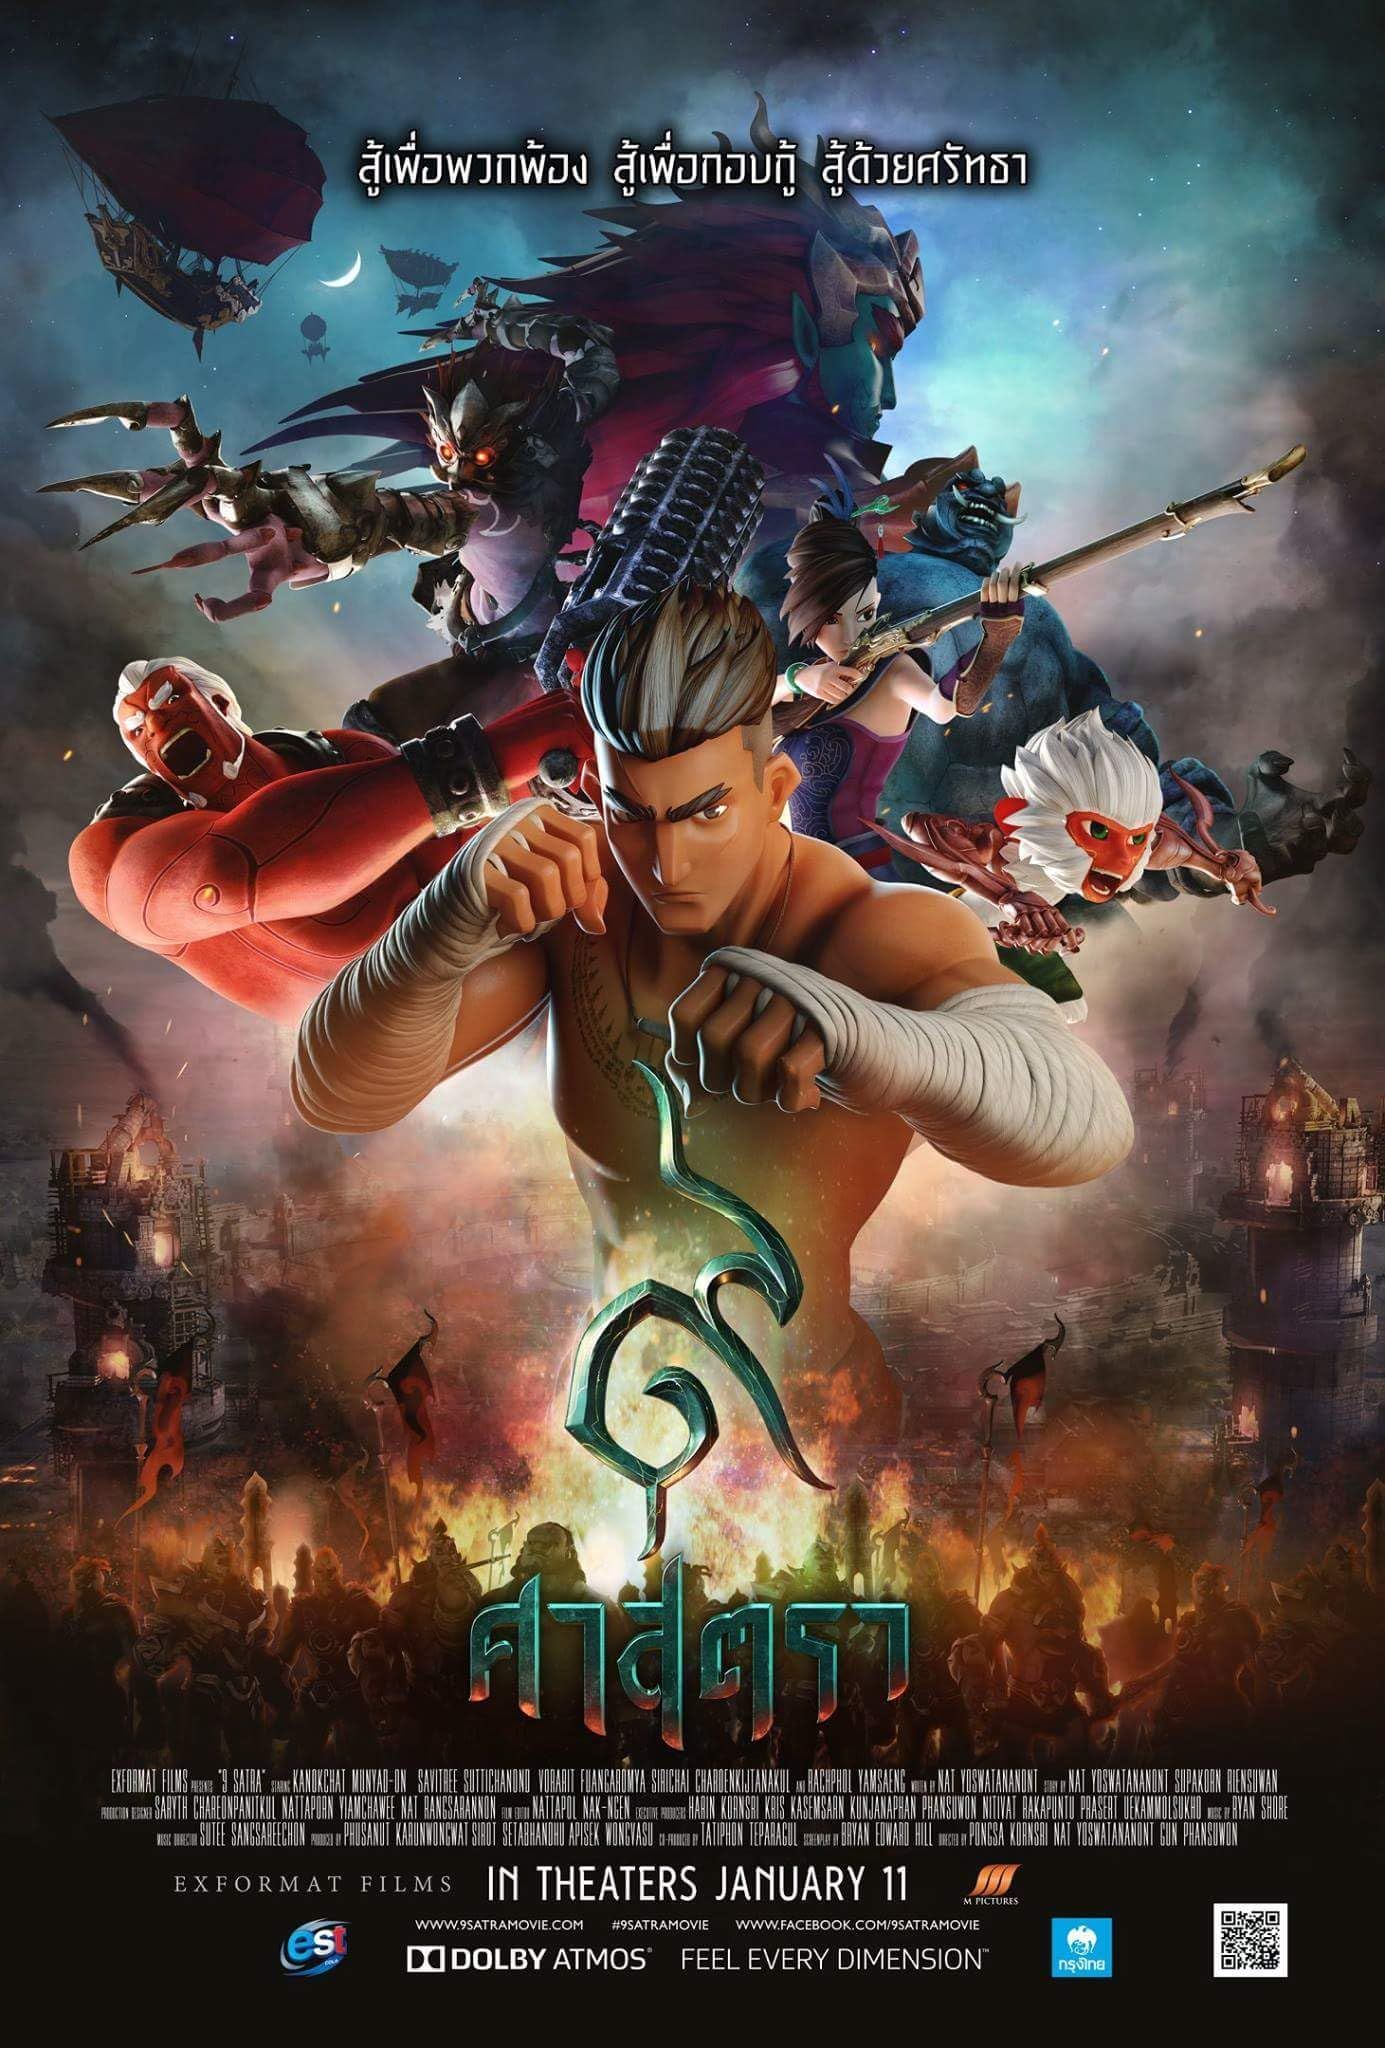 The Legend of Muay Thai 9 Satra (2018) Hindi Dubbed ORG HDRip Full Movie 720p 480p